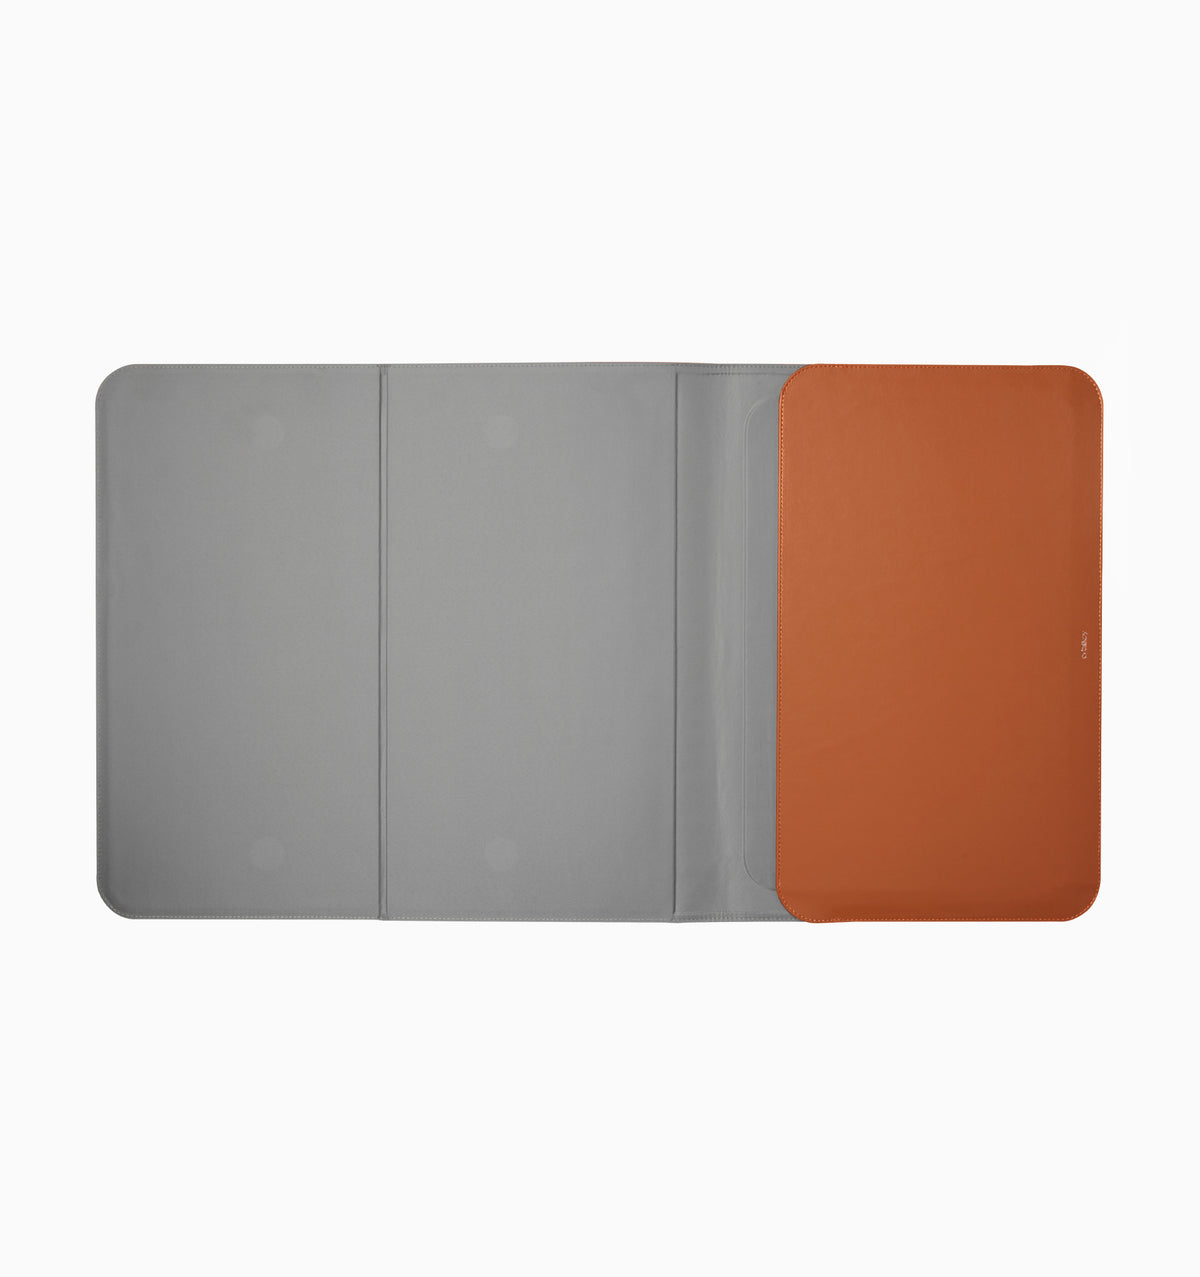 Orbitkey 16" Hybrid Laptop Sleeve / Desk Mat - Terracotta